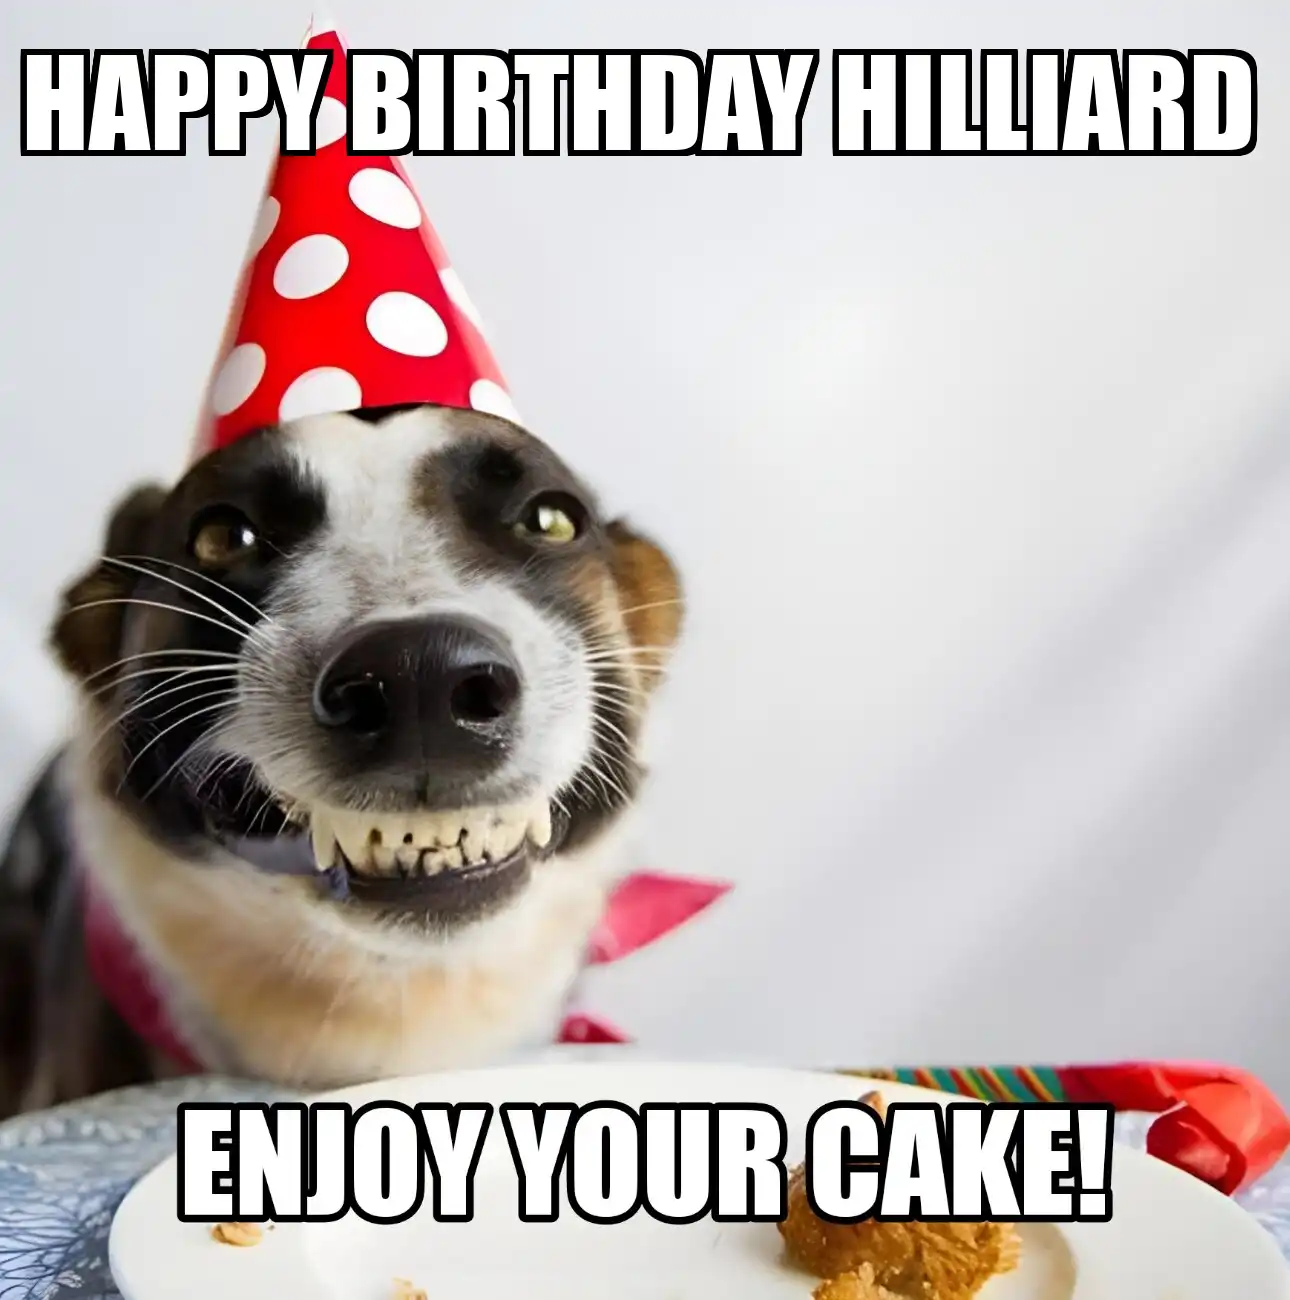 Happy Birthday Hilliard Enjoy Your Cake Dog Meme